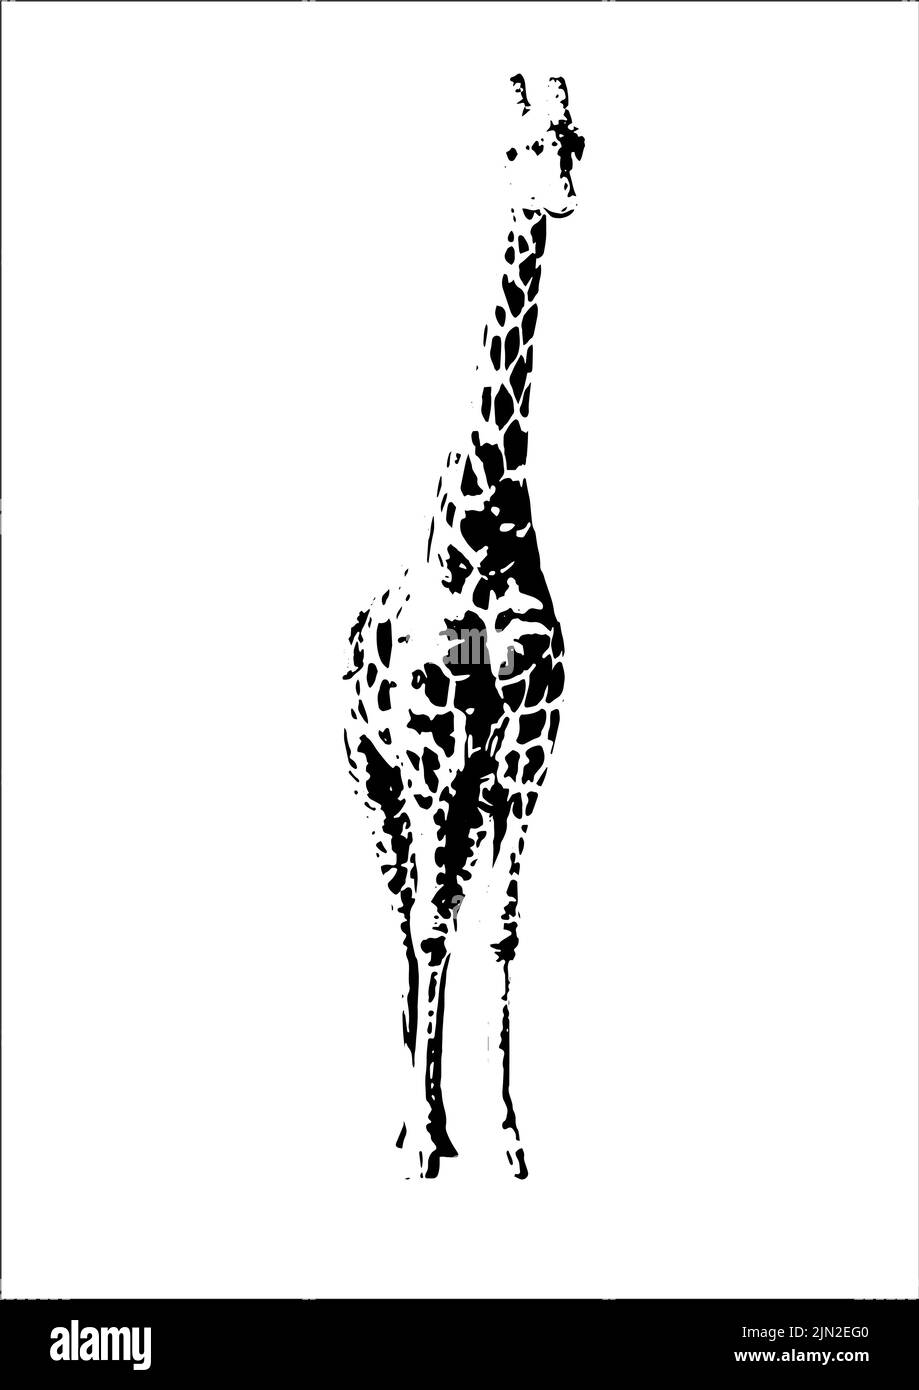 Single giraffe artwork for patterns and prints. African wildlife artwork. Giraffe logo or stamp. Animal graphic. Stock Photo